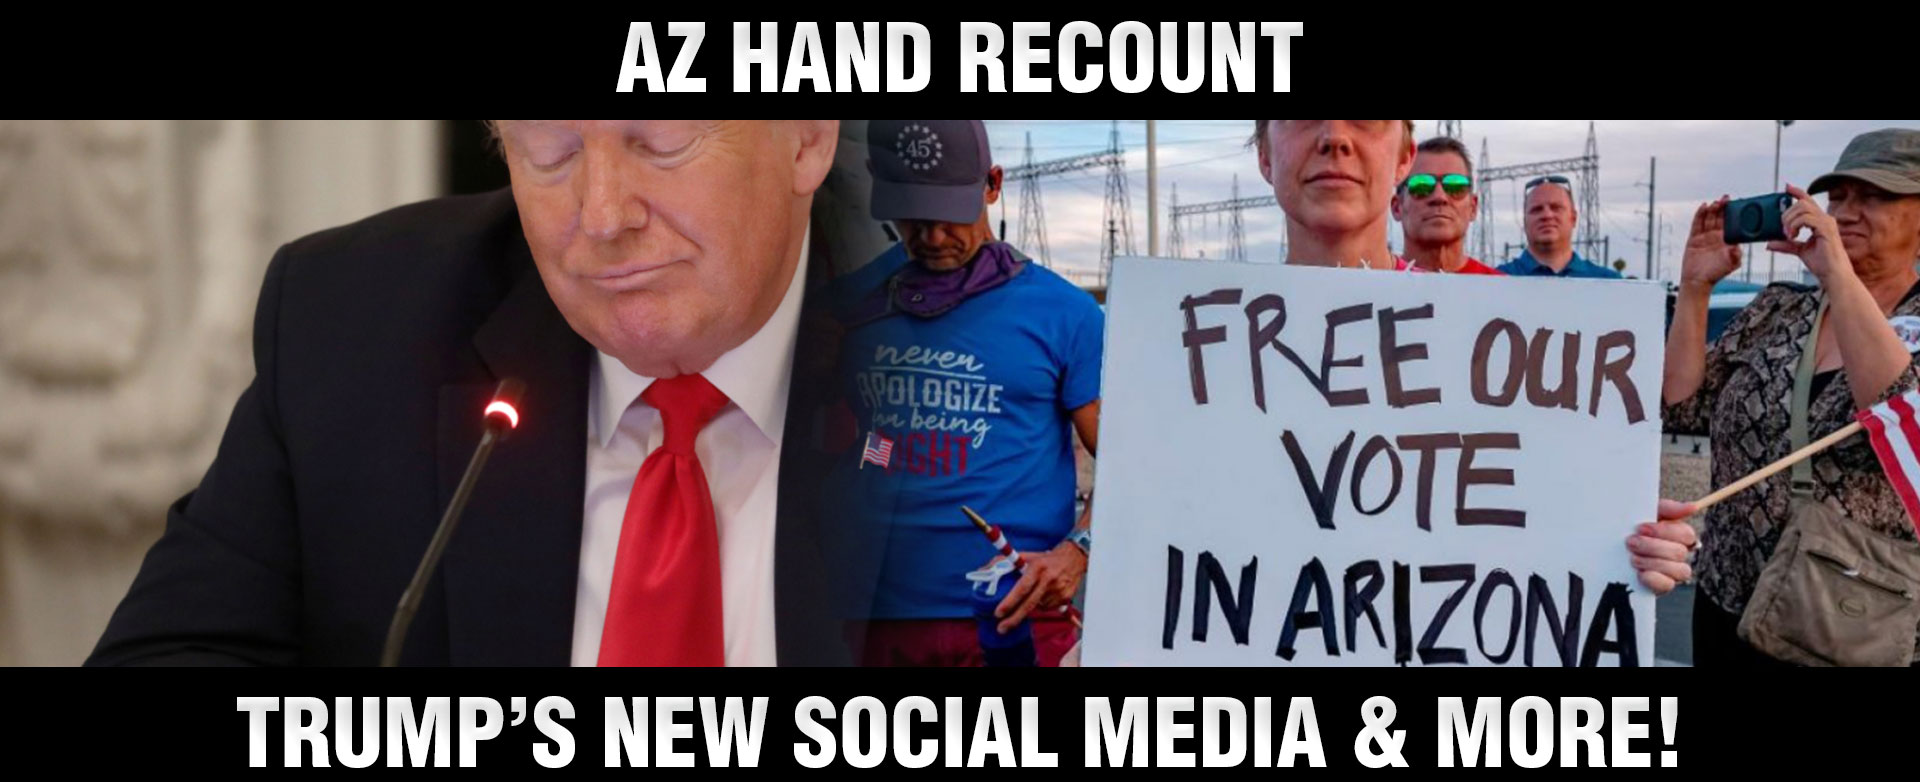 MyPatriotsNetwork-AZ Hand Recount, Trump’s New Social Media & More! March 22, 2021 Update